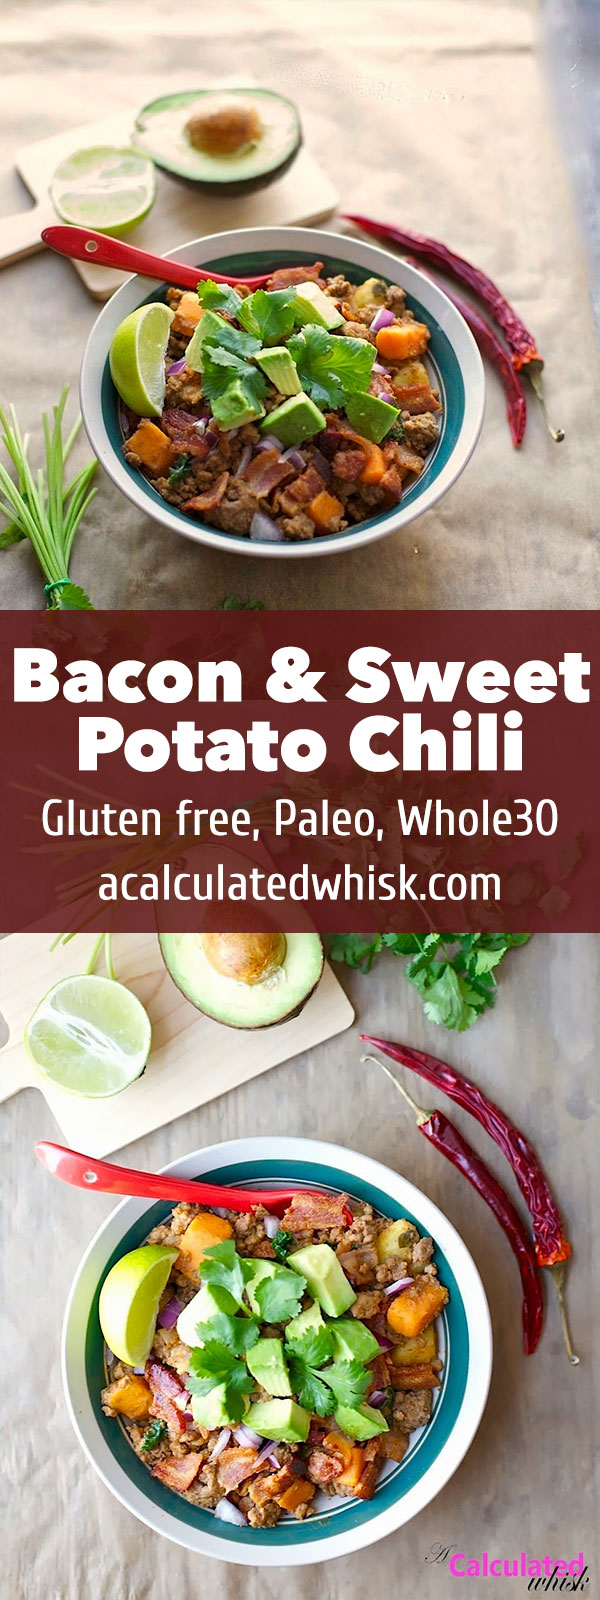 Bacon & Sweet Potato Chili (Gluten free, Paleo, Whole30)